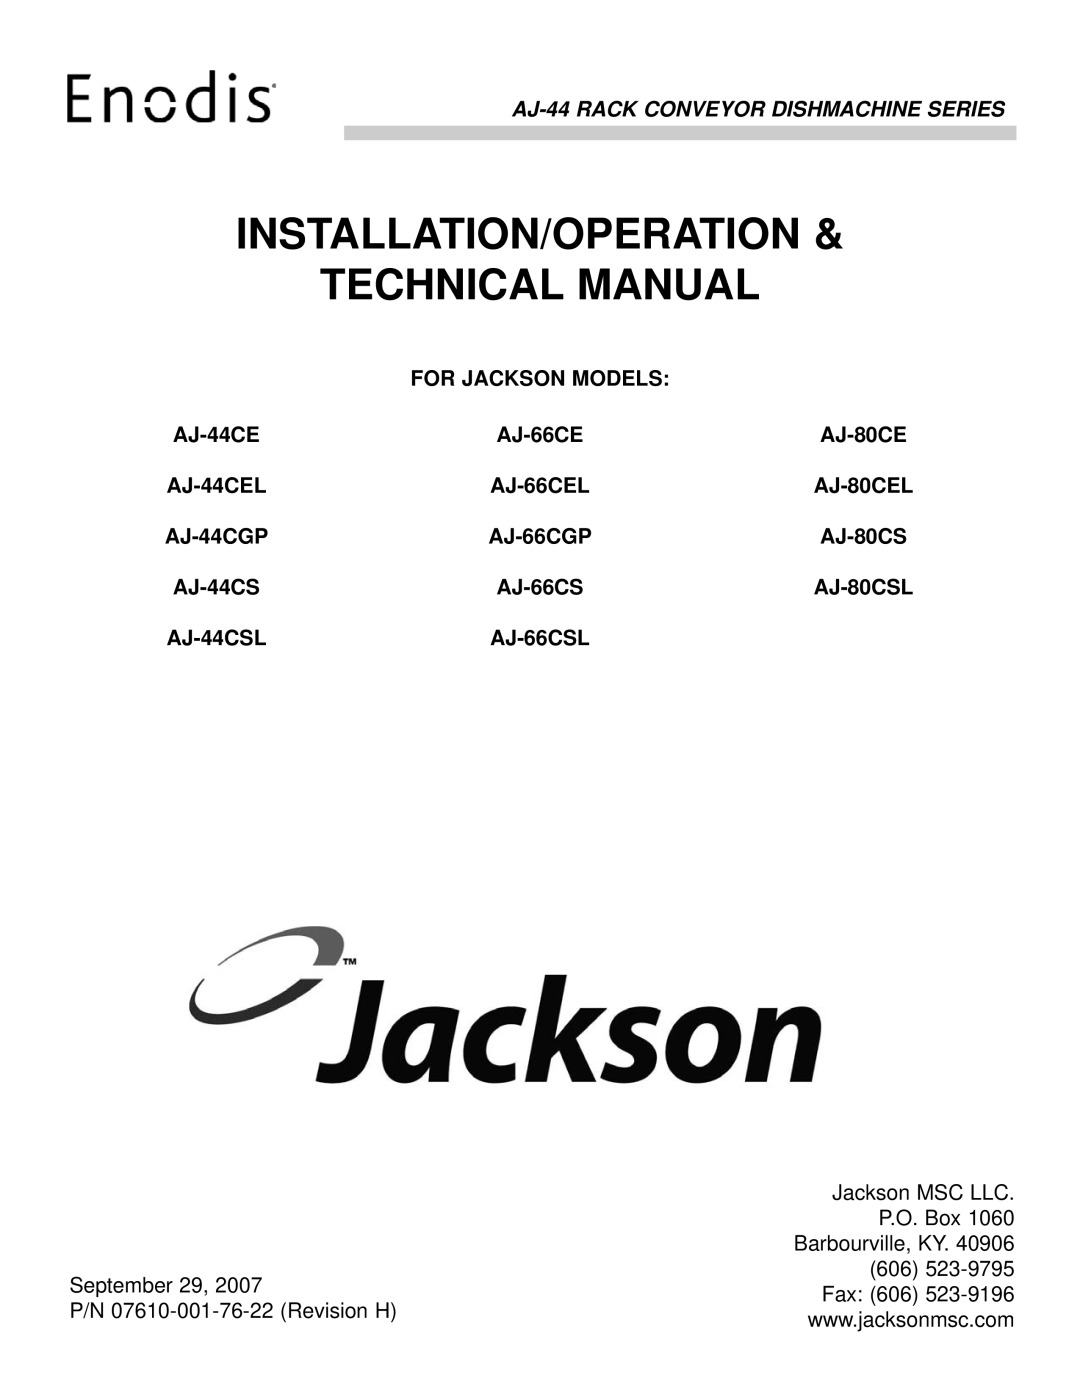 Jackson technical manual Installation/Operation Technical Manual, For Jackson Models, AJ-66CEL, AJ-44CGP, AJ-66CGP 